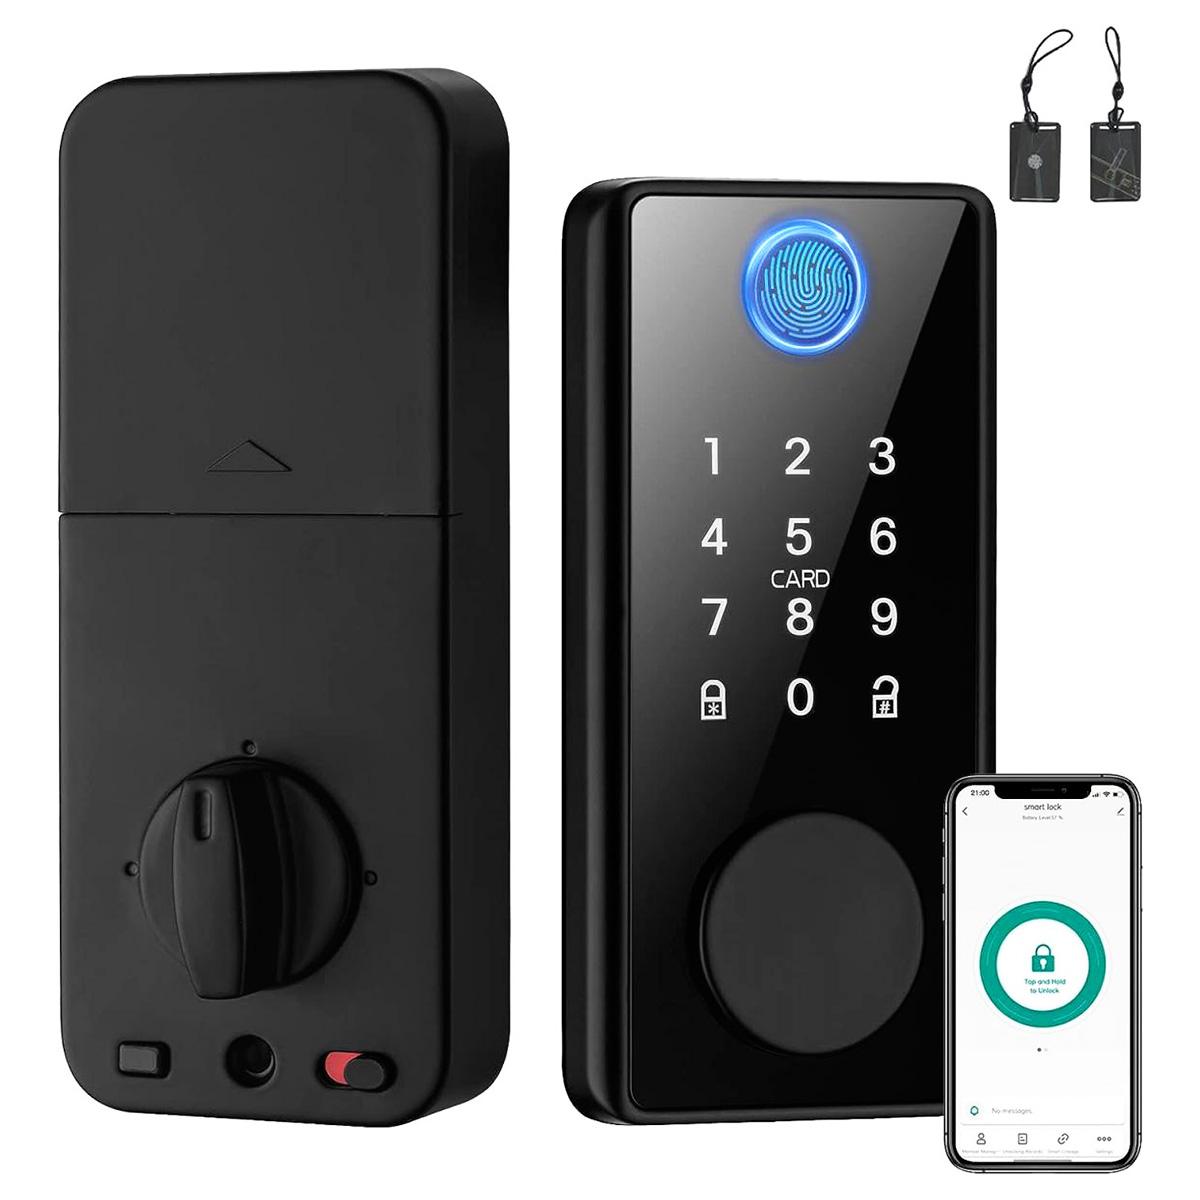 D 8  スマート指紋ドアロック、落書きアプリは鍵なしでドアロック開始、キーボード付き電子ドアロック、指紋認識、ICカード、オートロック、家庭内認識防止パスワードをサポートし、家庭、ホテル、オフィス、アパートに適用